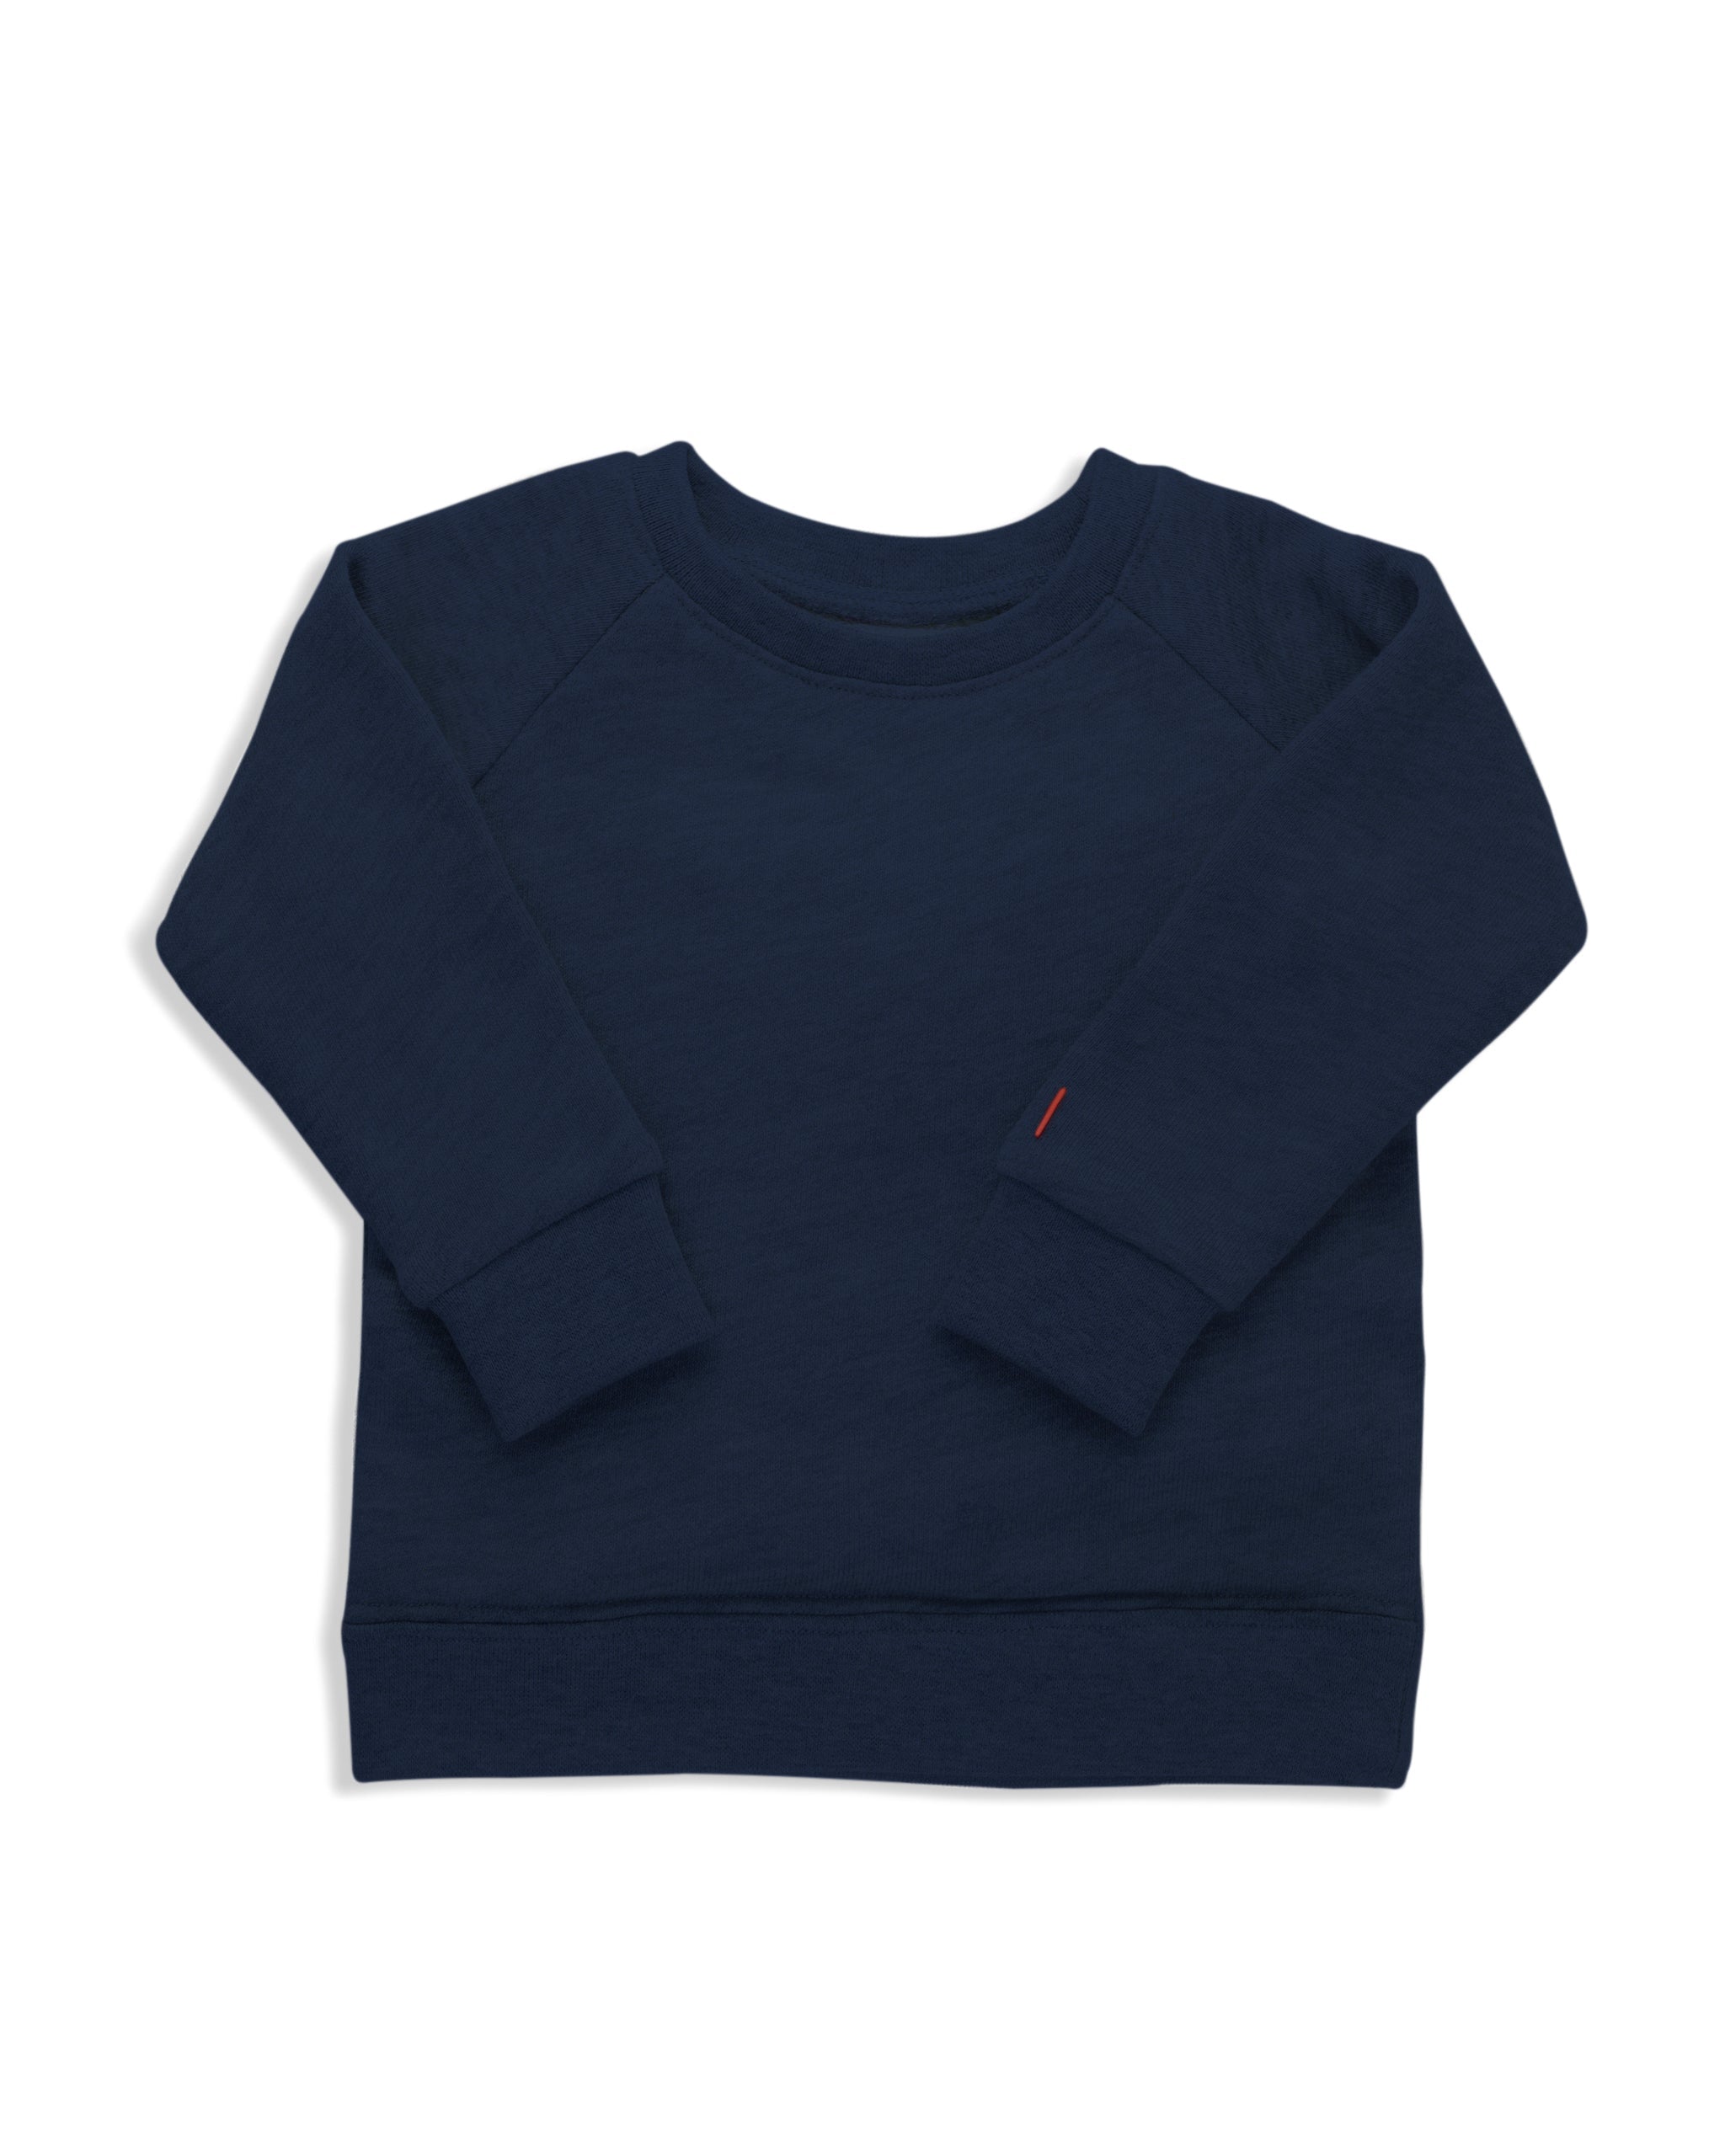 The Organic Pullover Sweatshirt [Navy]